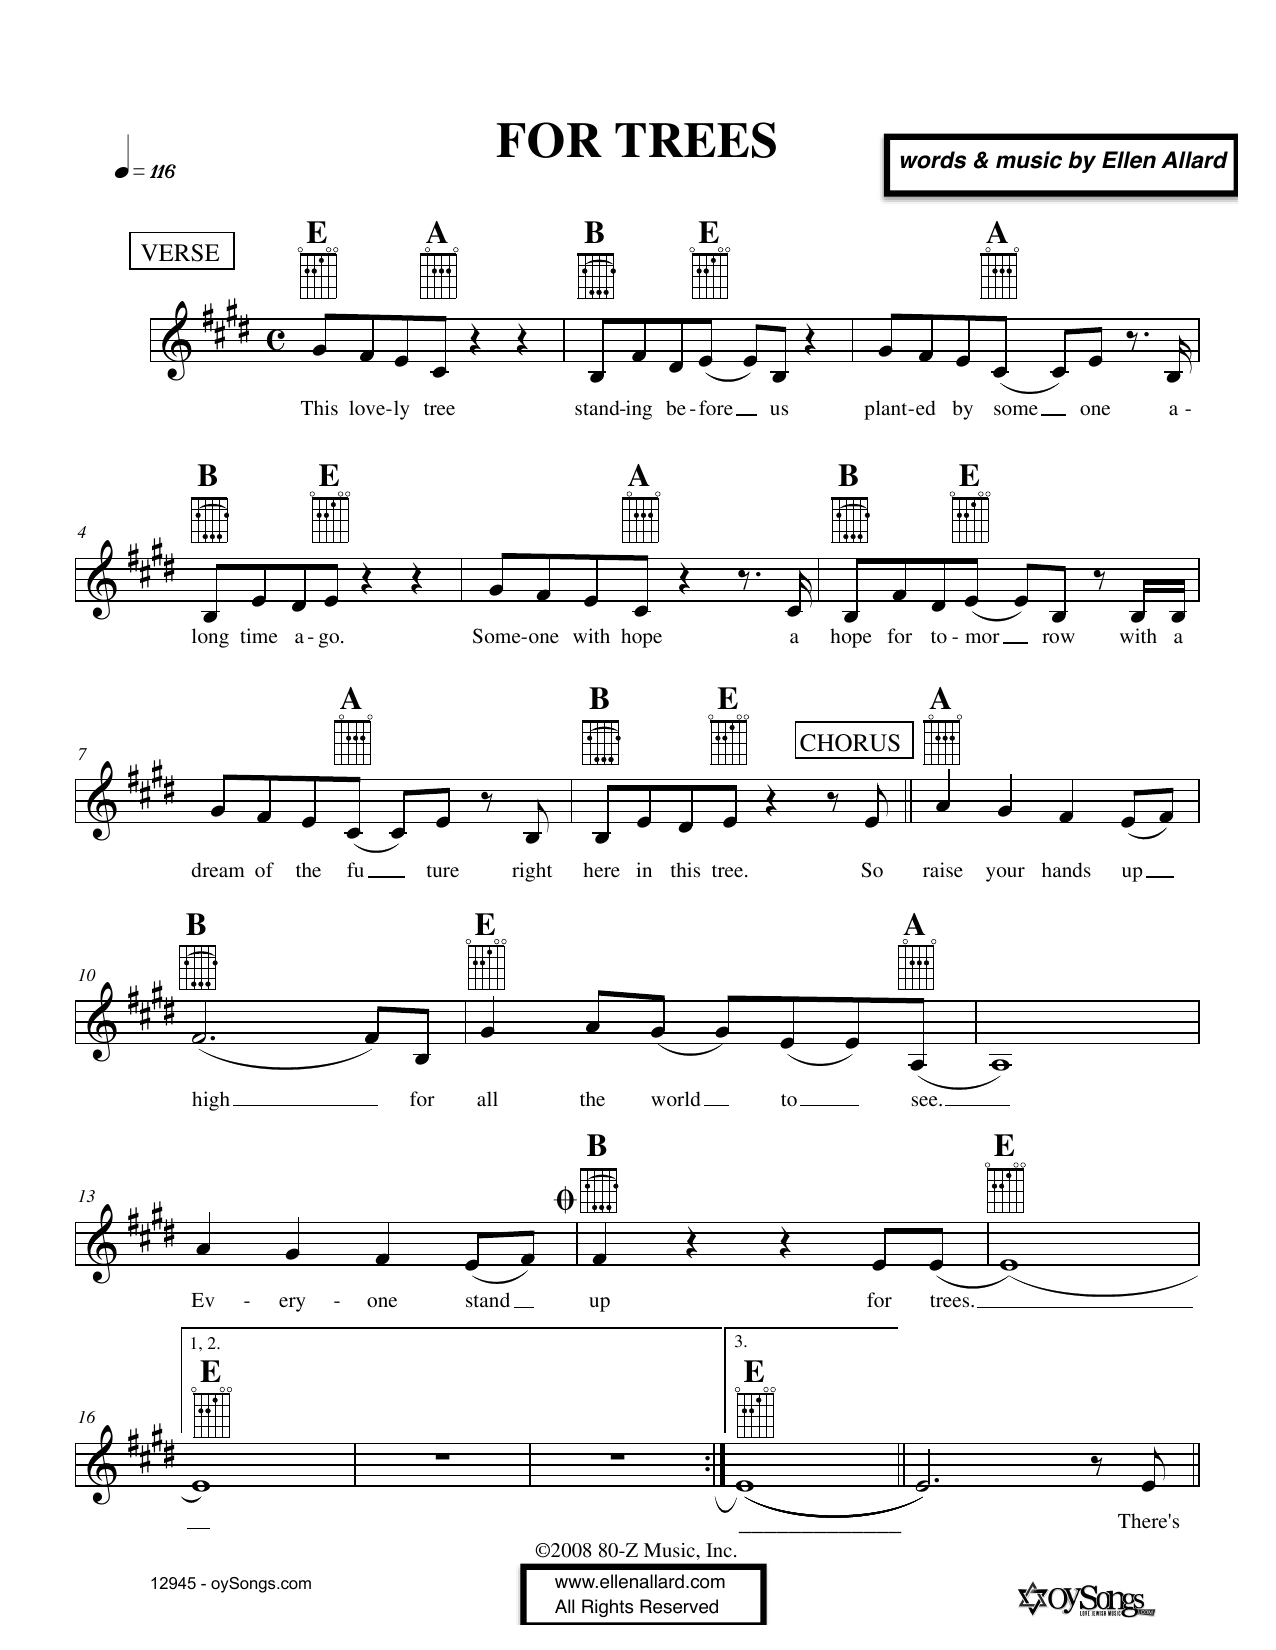 Ellen Allard For Trees Sheet Music Notes & Chords for Melody Line, Lyrics & Chords - Download or Print PDF